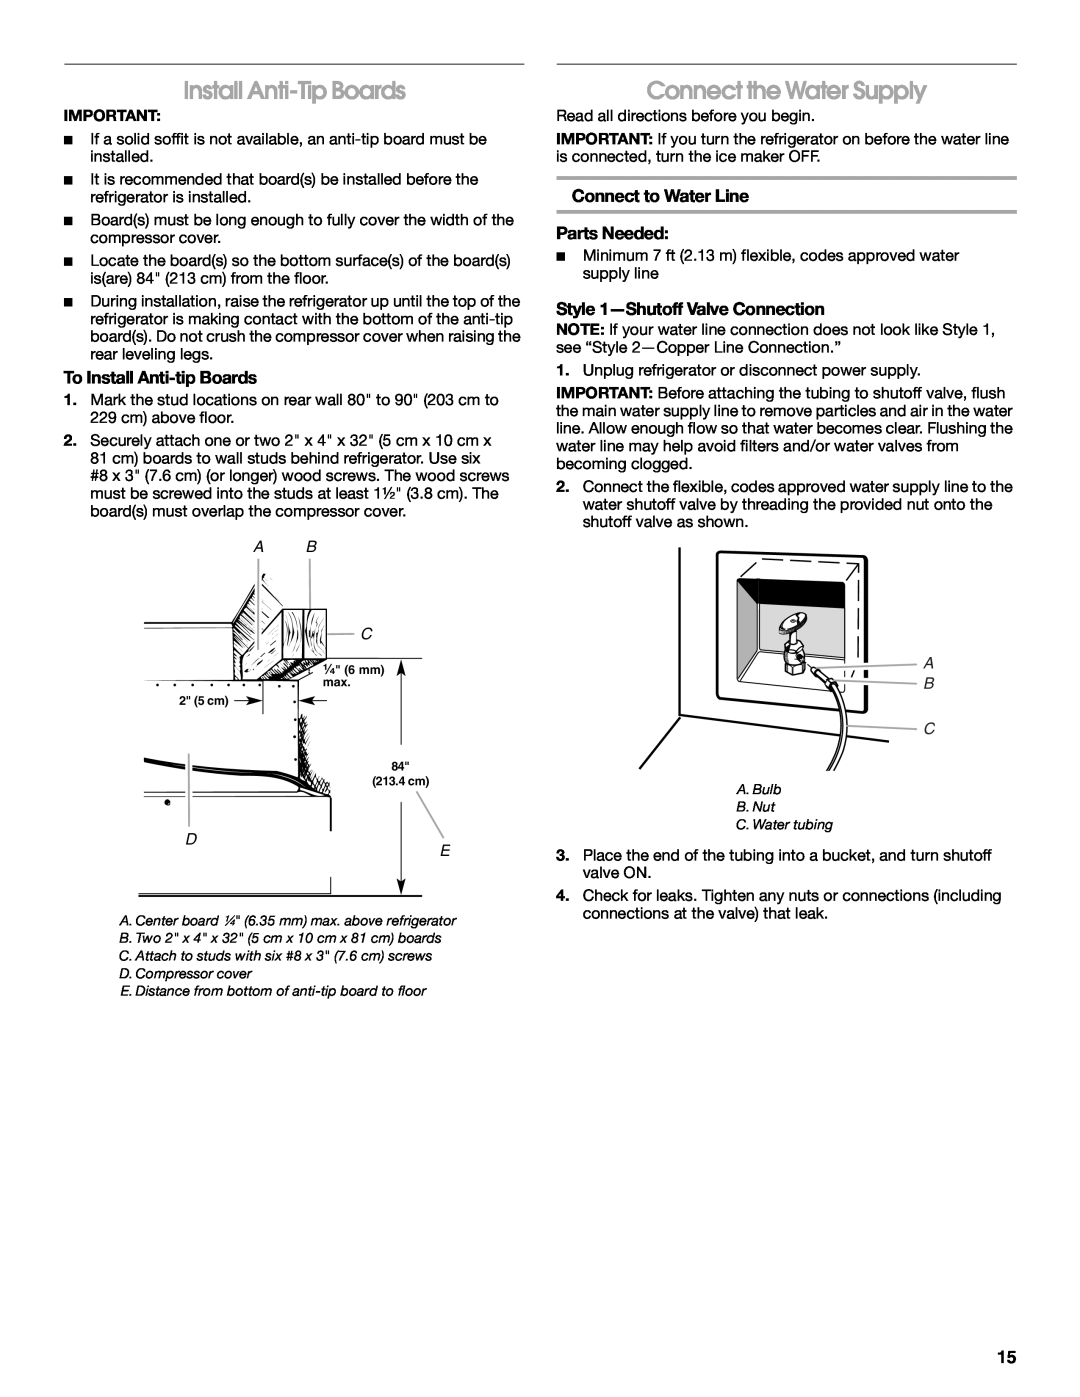 Jenn-Air W10379136B manual Install Anti-TipBoards, Connect the Water Supply, To Install Anti-tipBoards, A B C 